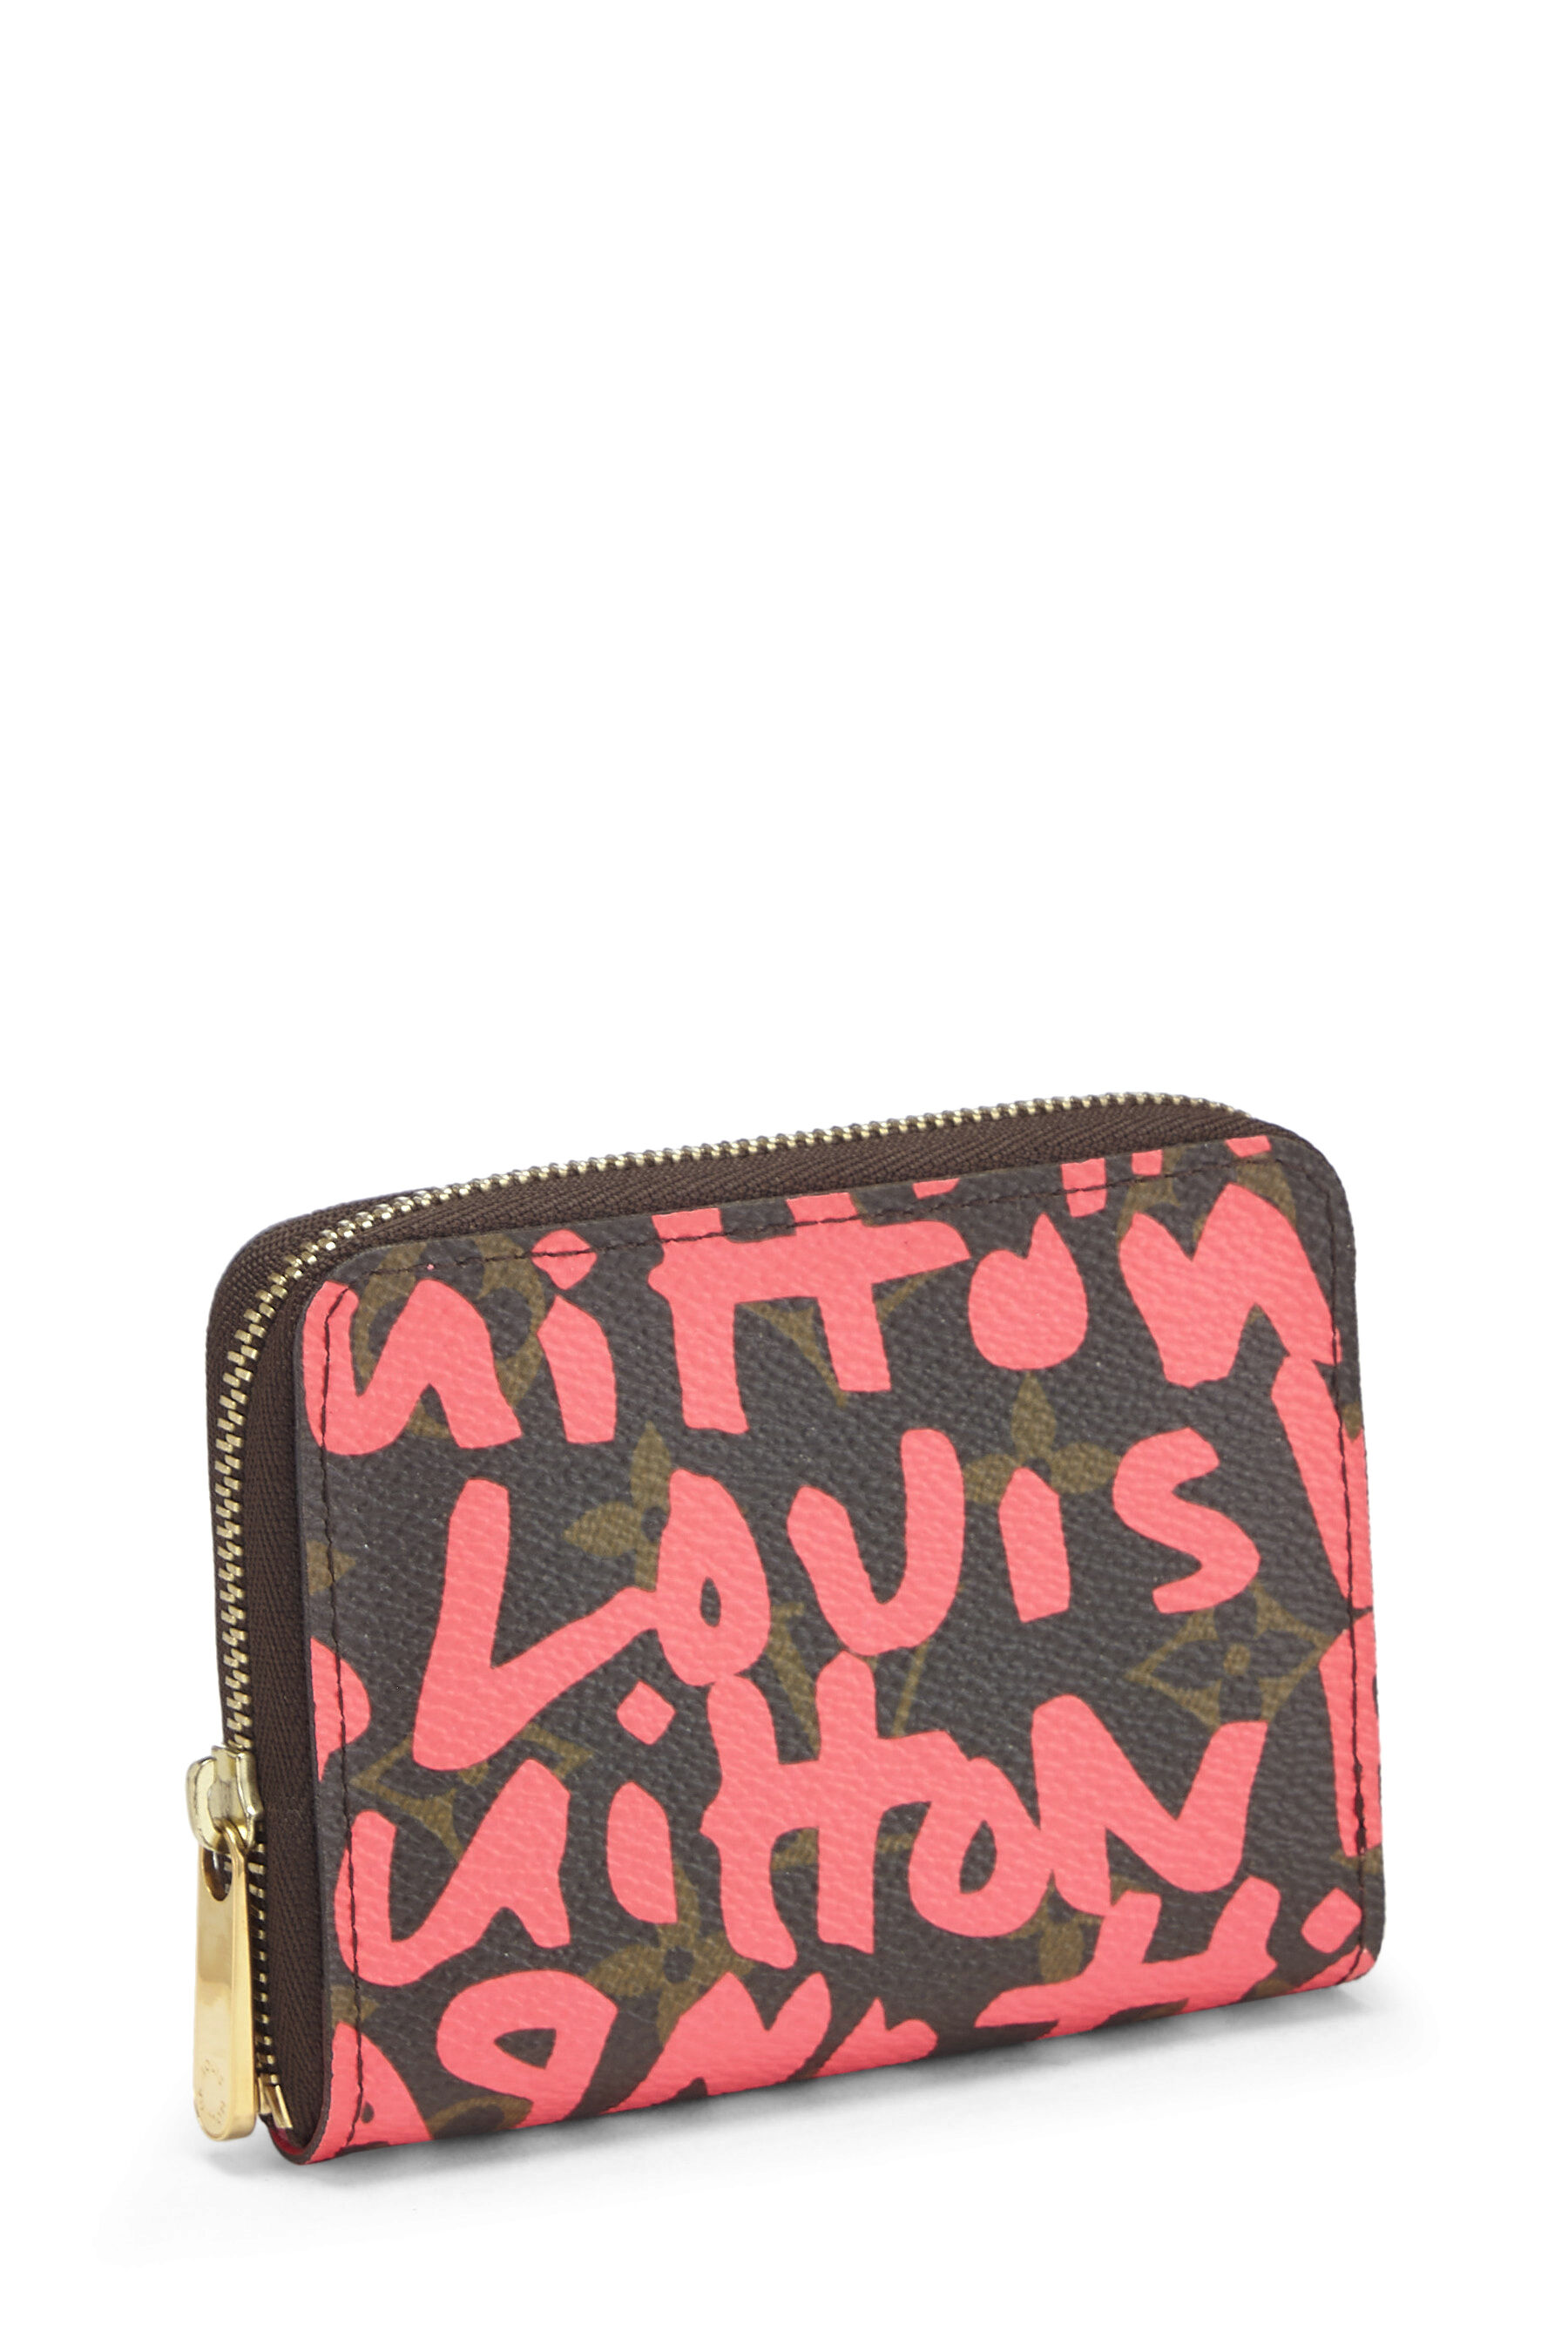 Louis Vuitton Zippy Wallet Graffiti Pink 2009 Collection Steven Sprouse  RARE!￼